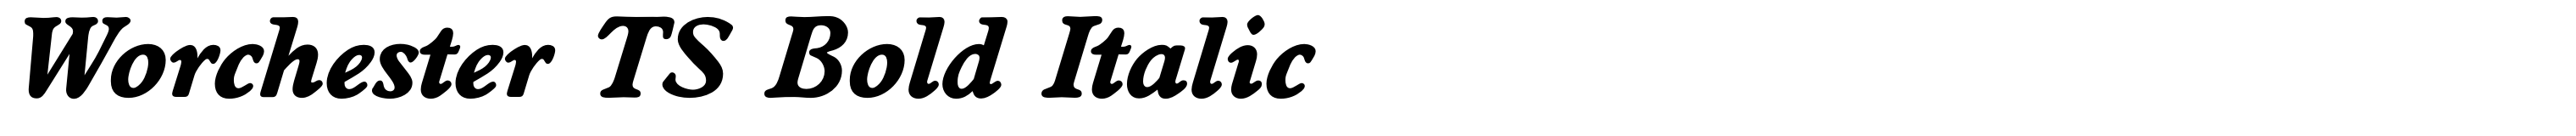 Worchester TS Bold Italic